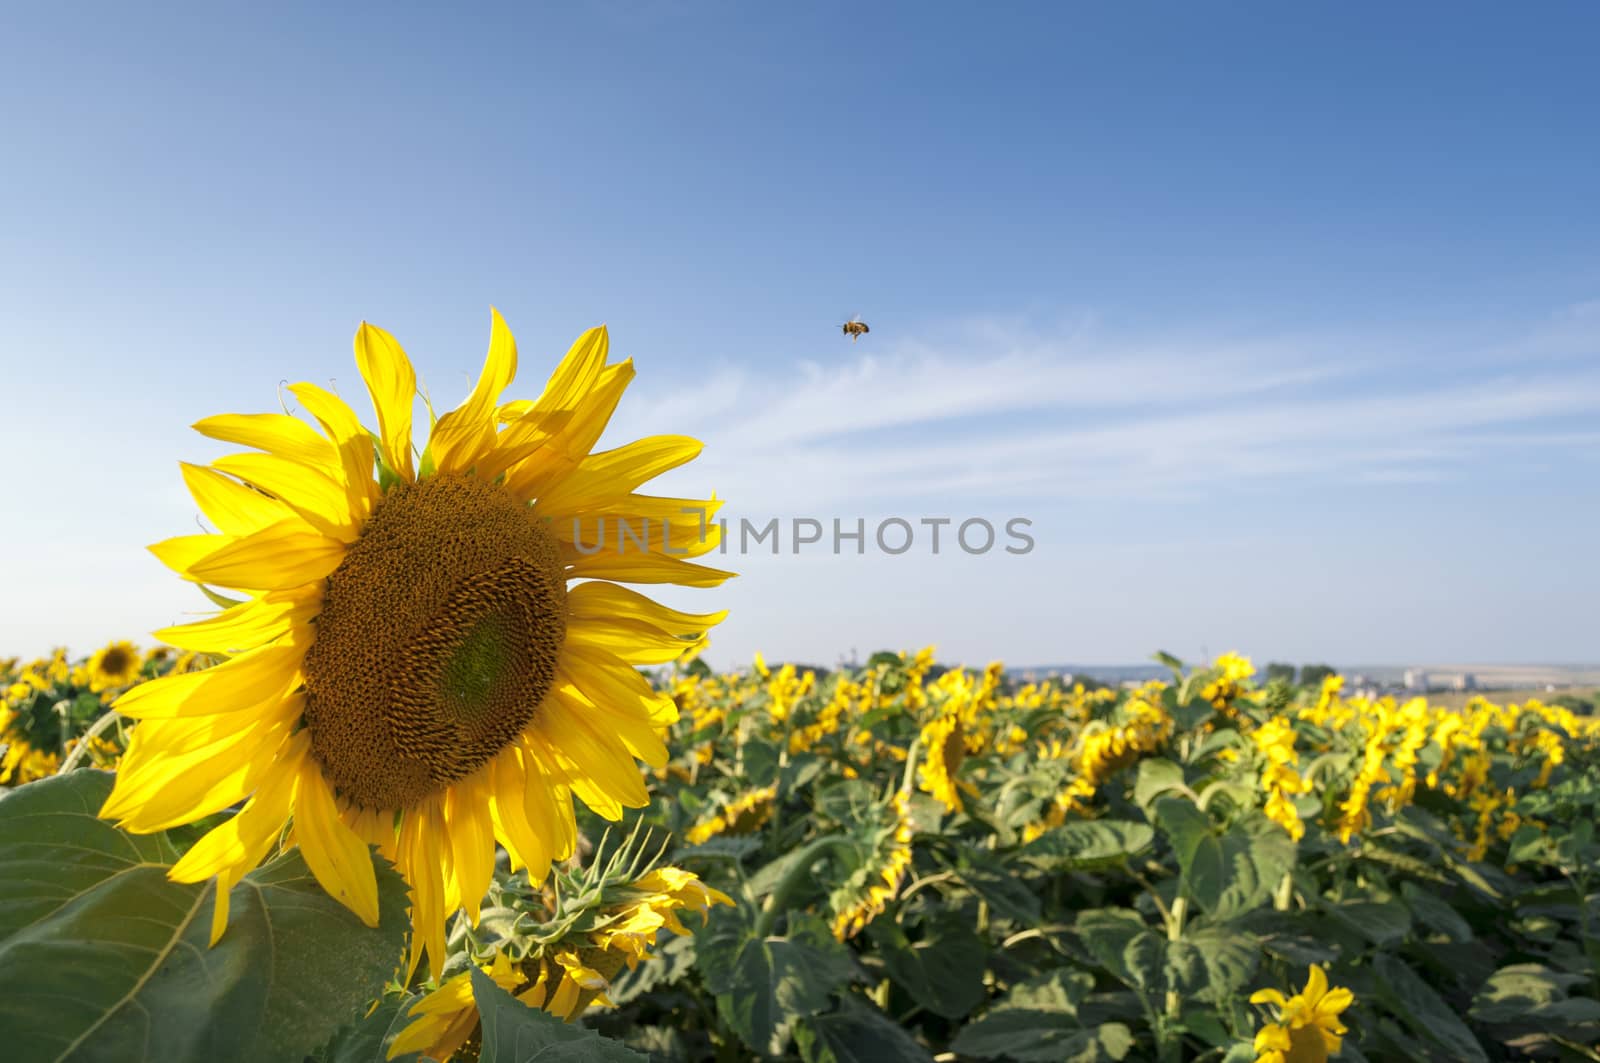 Field of sunflowers by maxmitzu